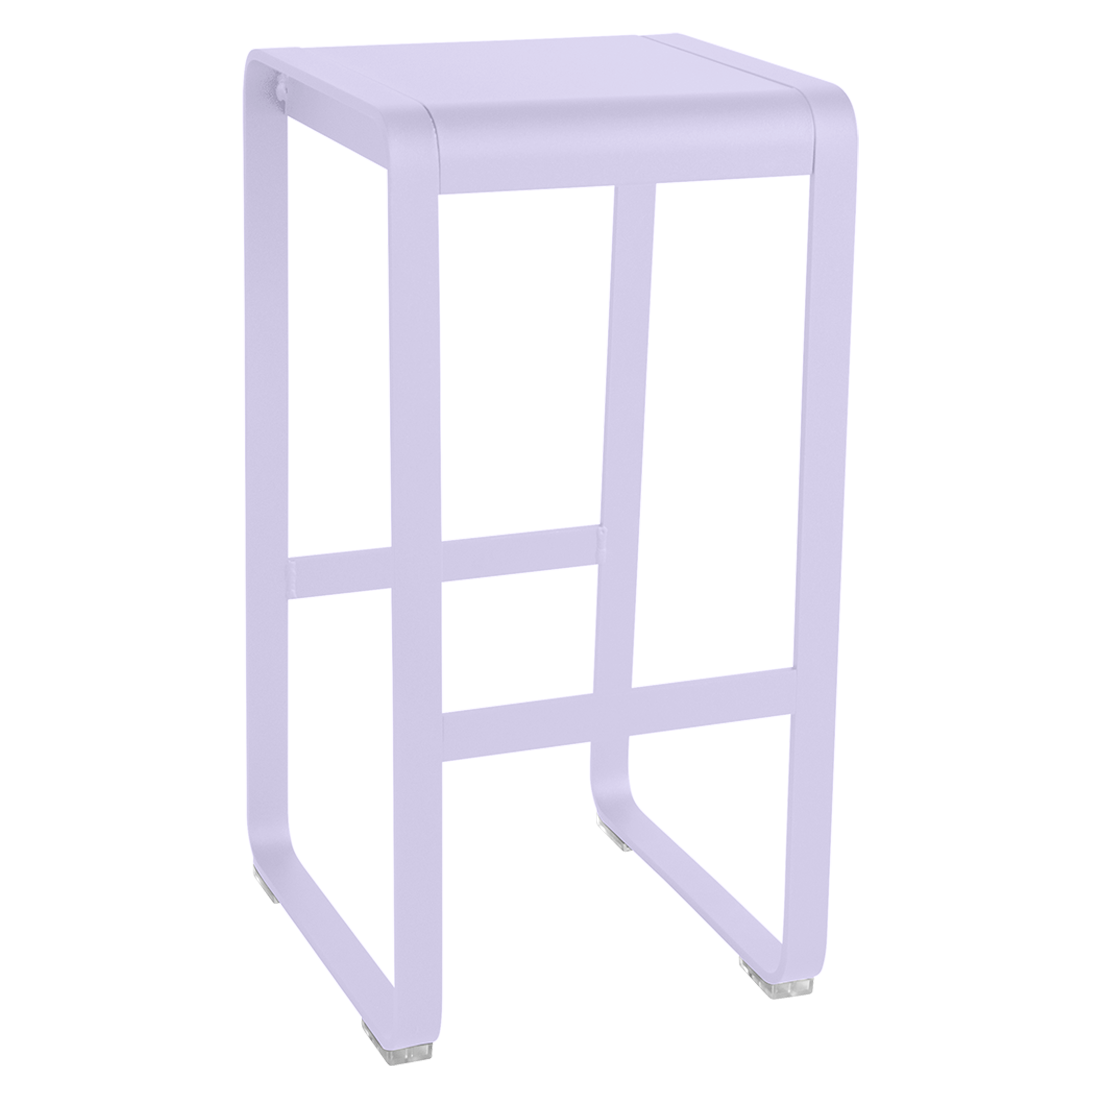 BELLEVIE bar stool